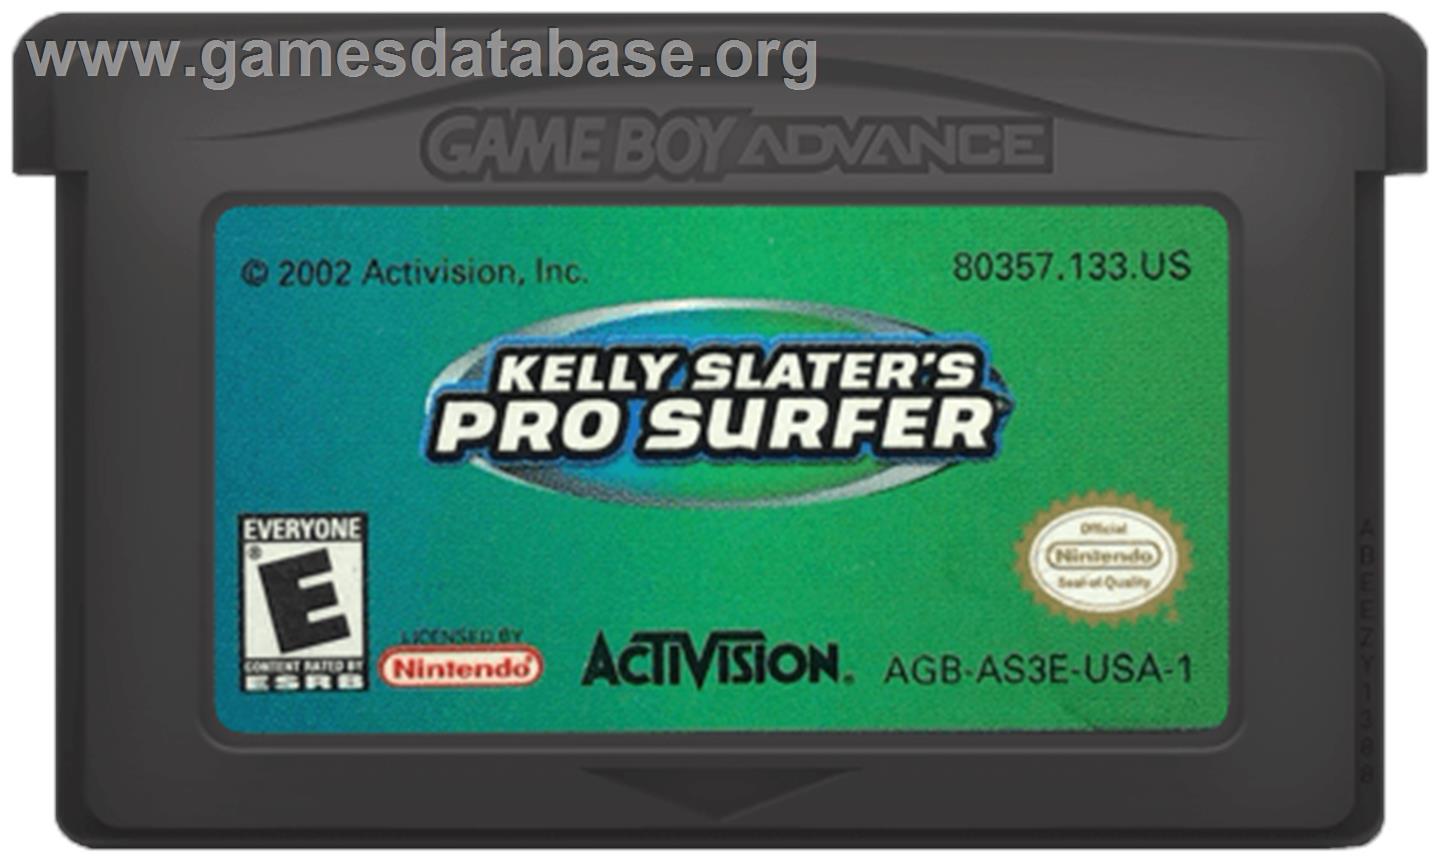 Kelly Slater's Pro Surfer - Nintendo Game Boy Advance - Artwork - Cartridge